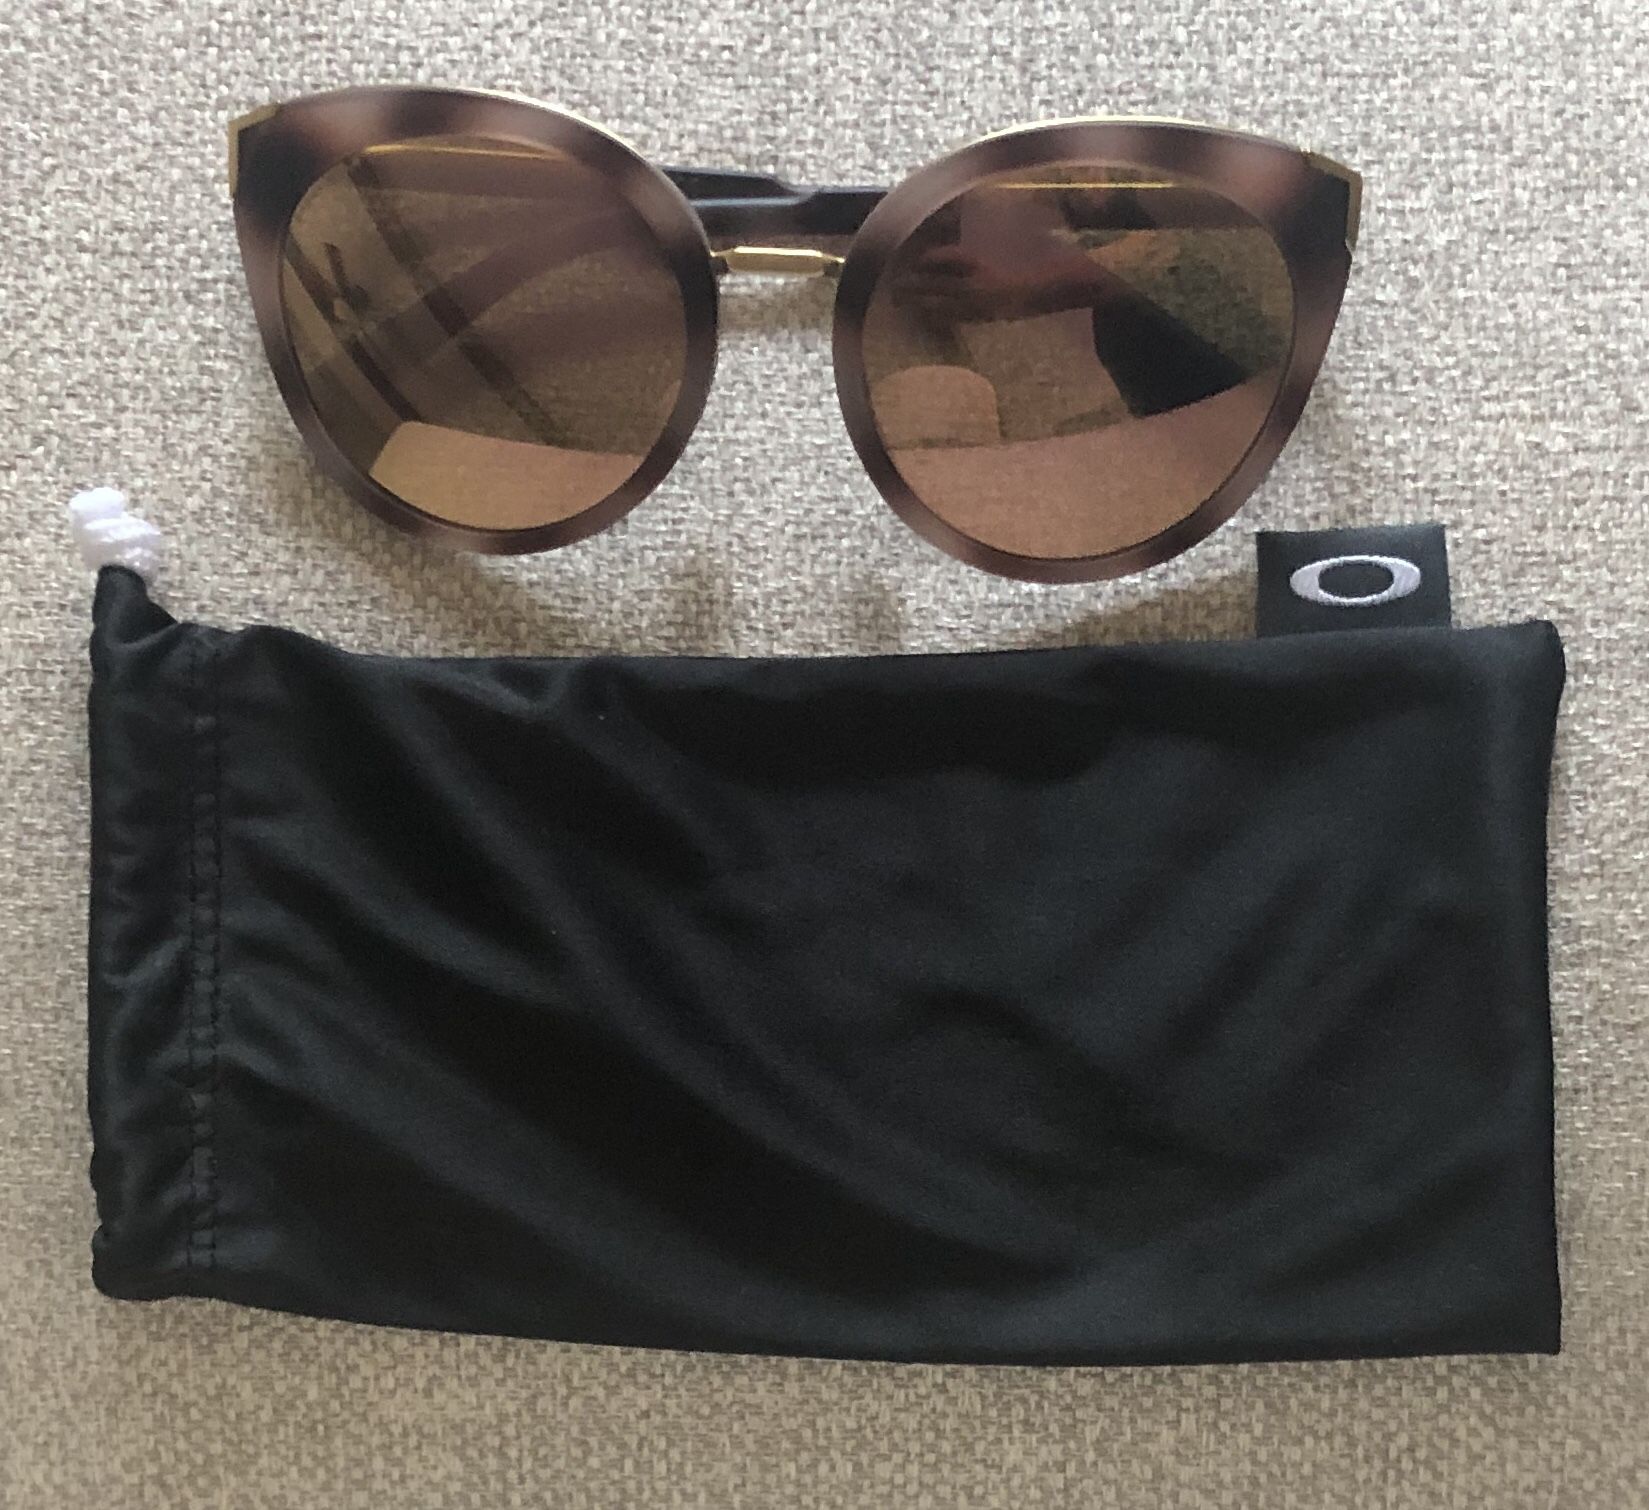 Women’s Oakley Sunglasses with Dust Bag